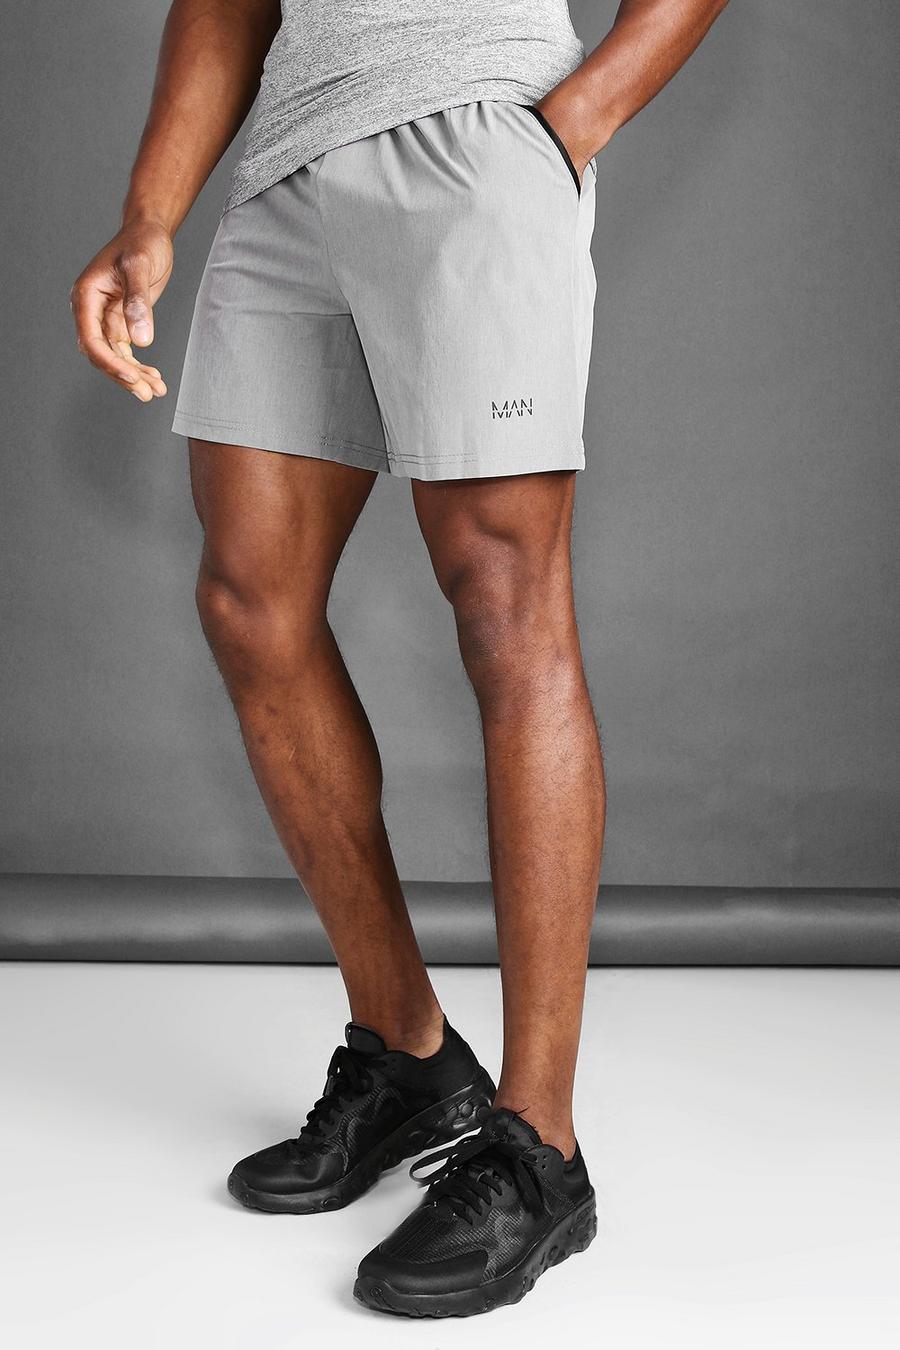 Pantalones cortos de marga MAN Active, Marga gris image number 1